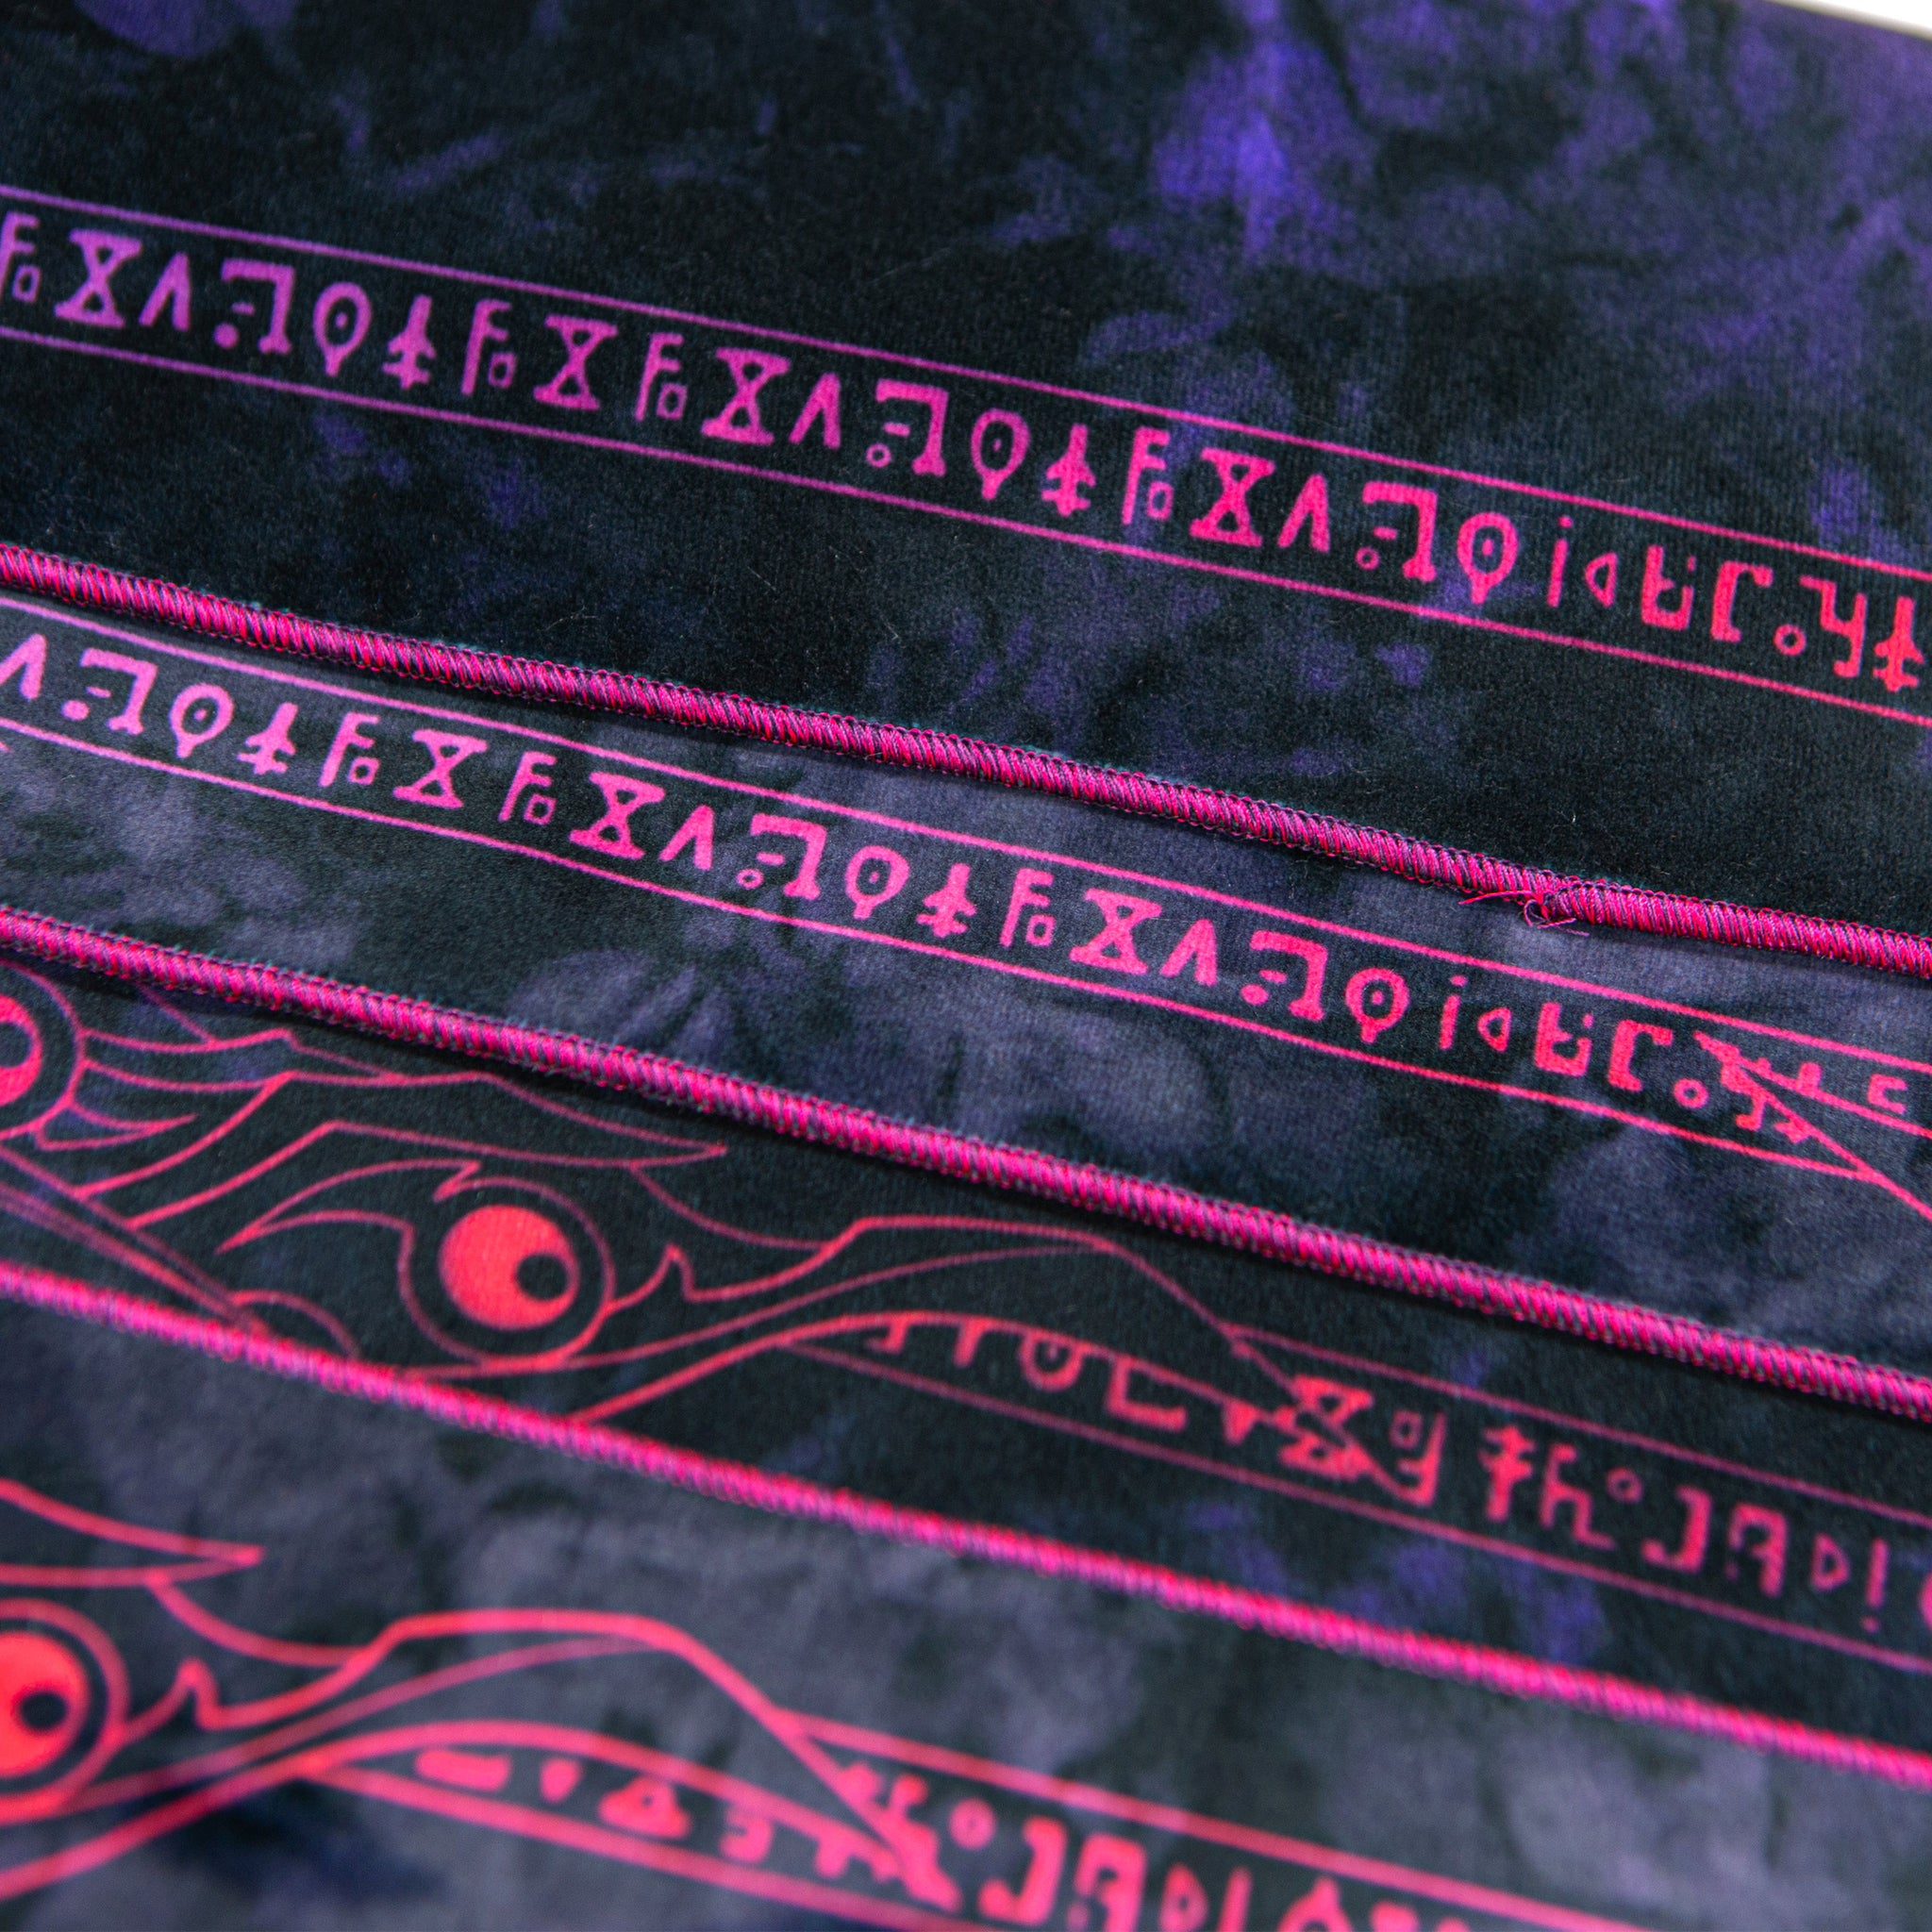 The Magician's Altar | Pvraprint | Deluxe L.E. Suede x Nebulous Deep *Zone Markers*